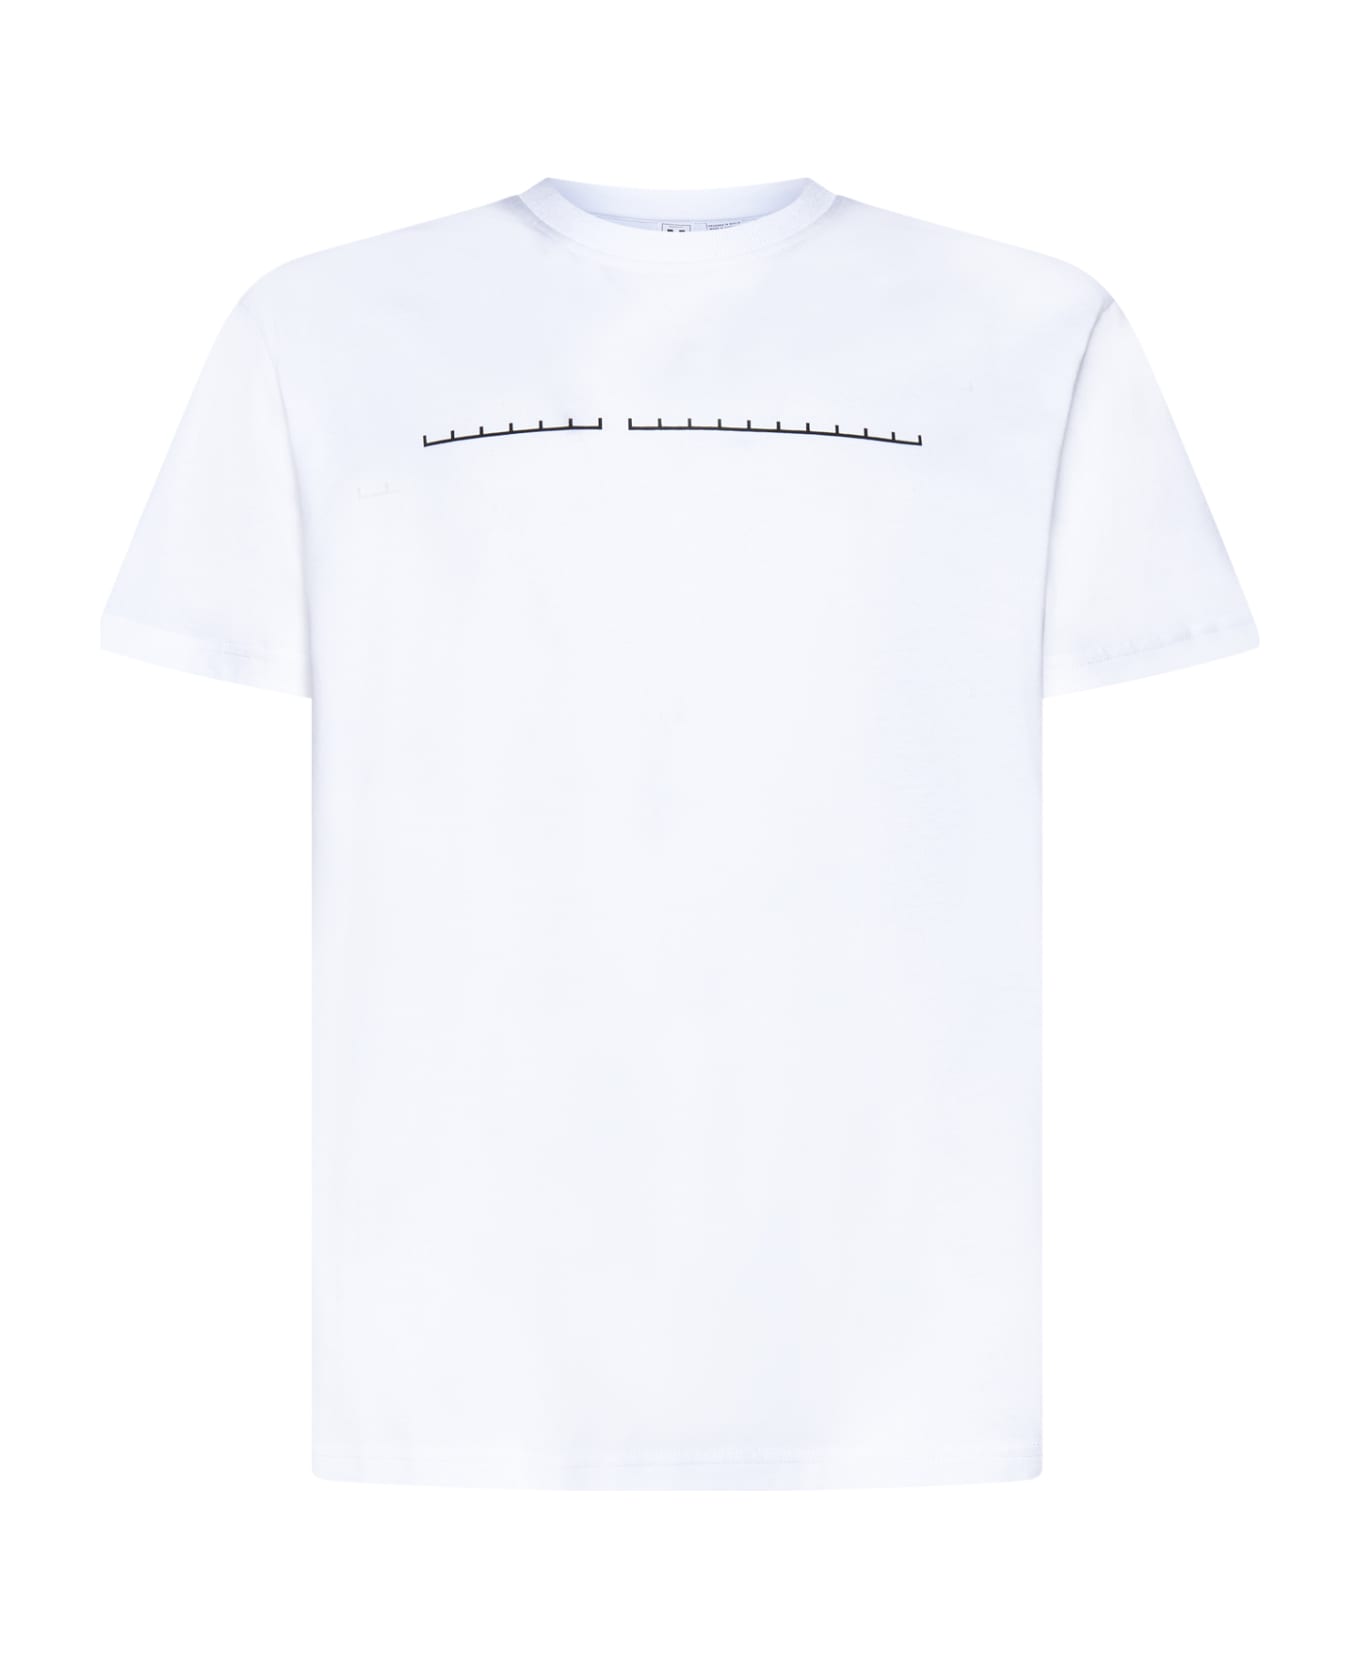 Random Identities T-Shirt - White logo